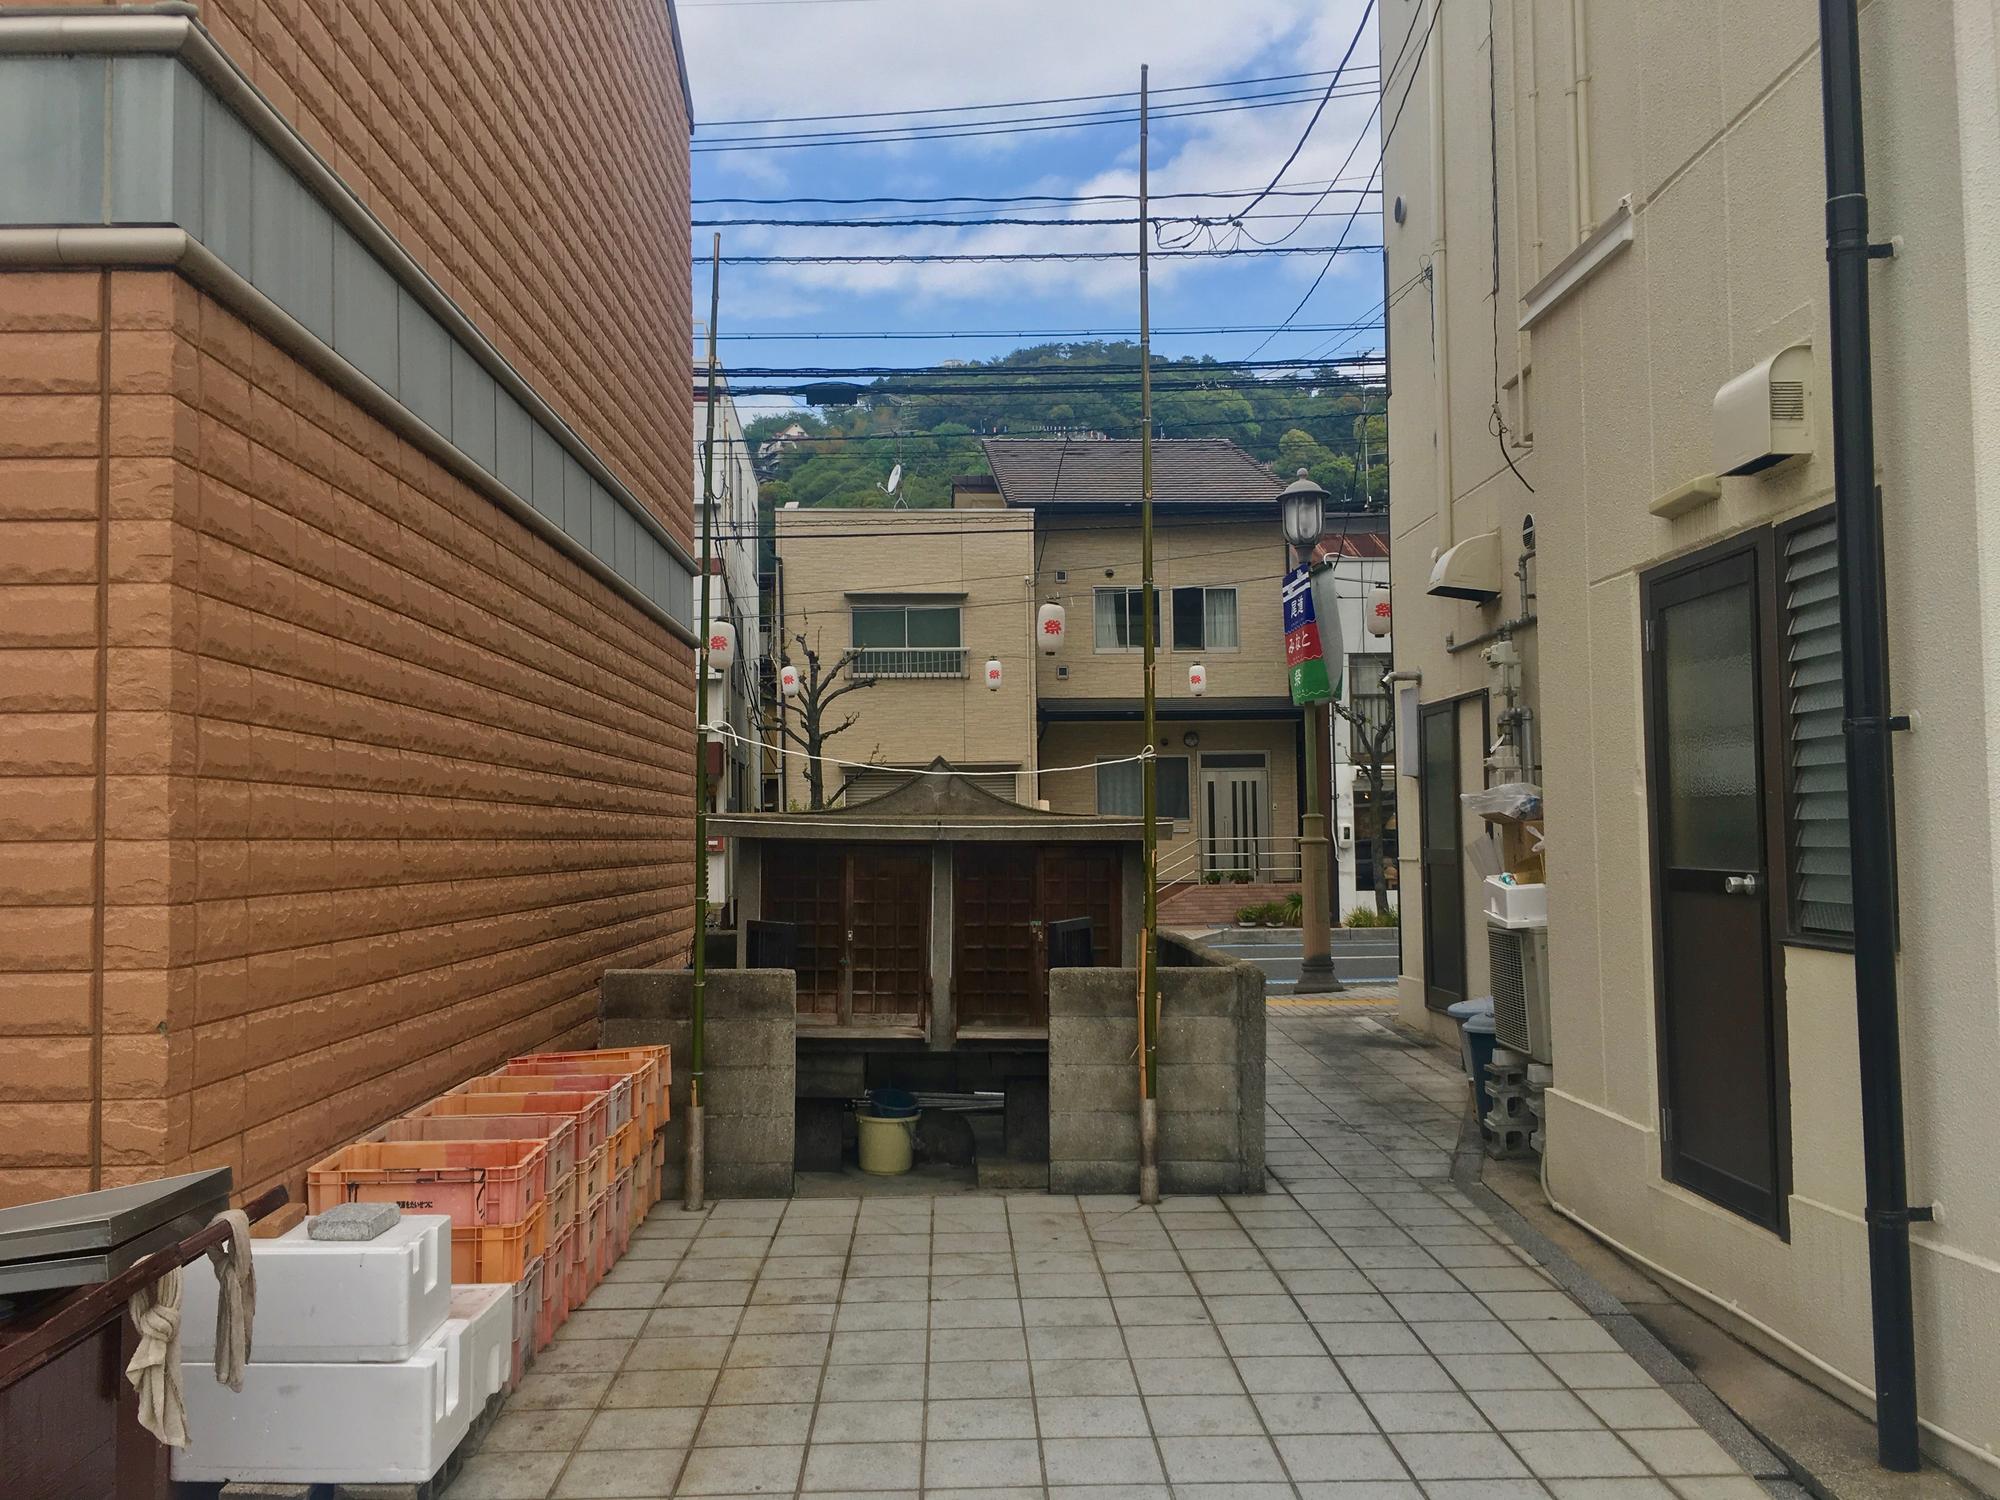 🇯🇵 Onomichi, Japan, April 2019.